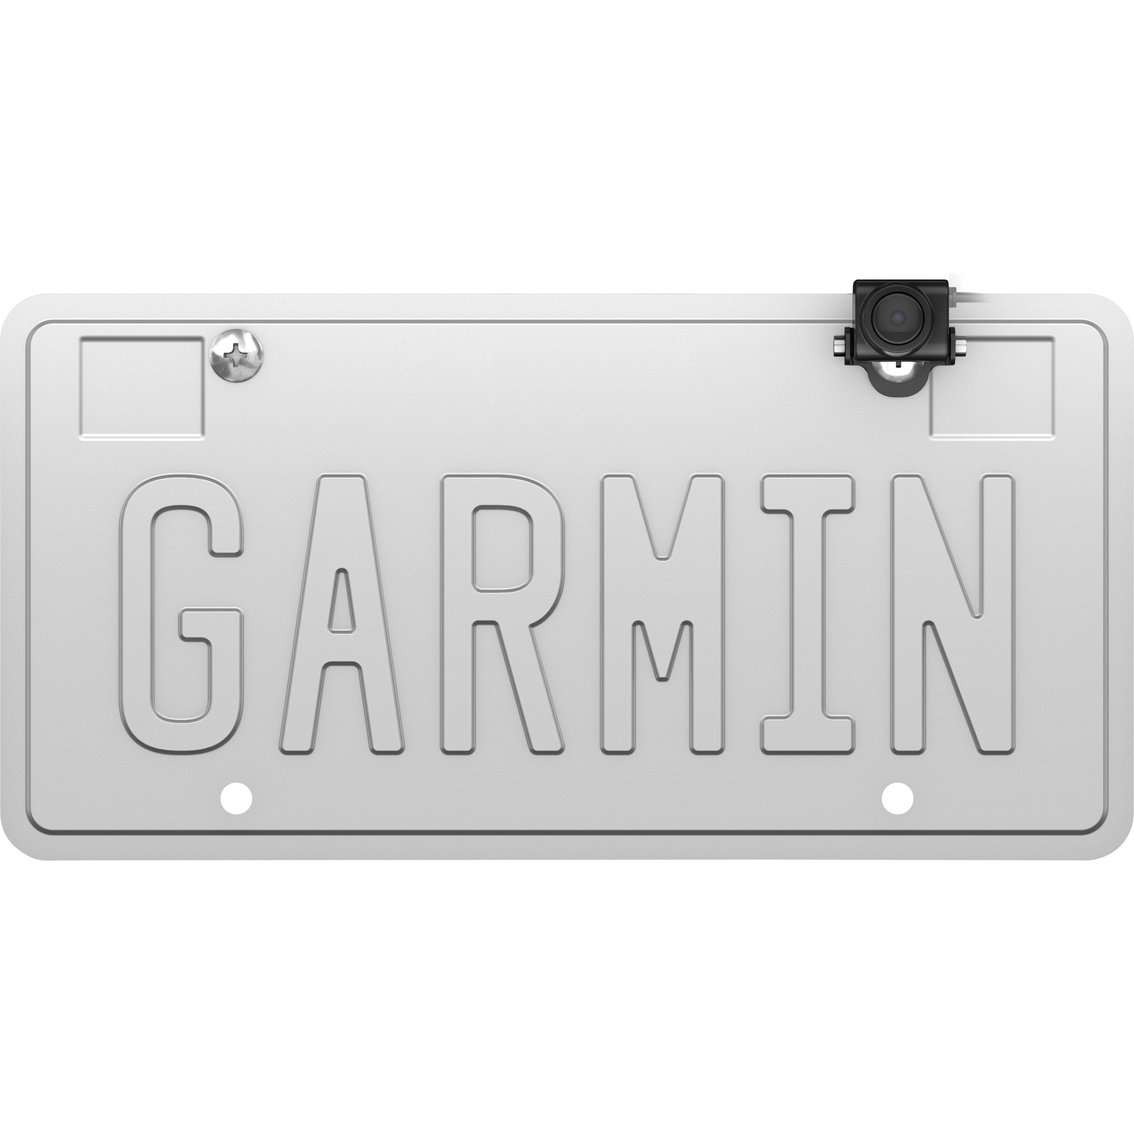 Garmin BC 50 Wireless Backup Camera - Image 5 of 5